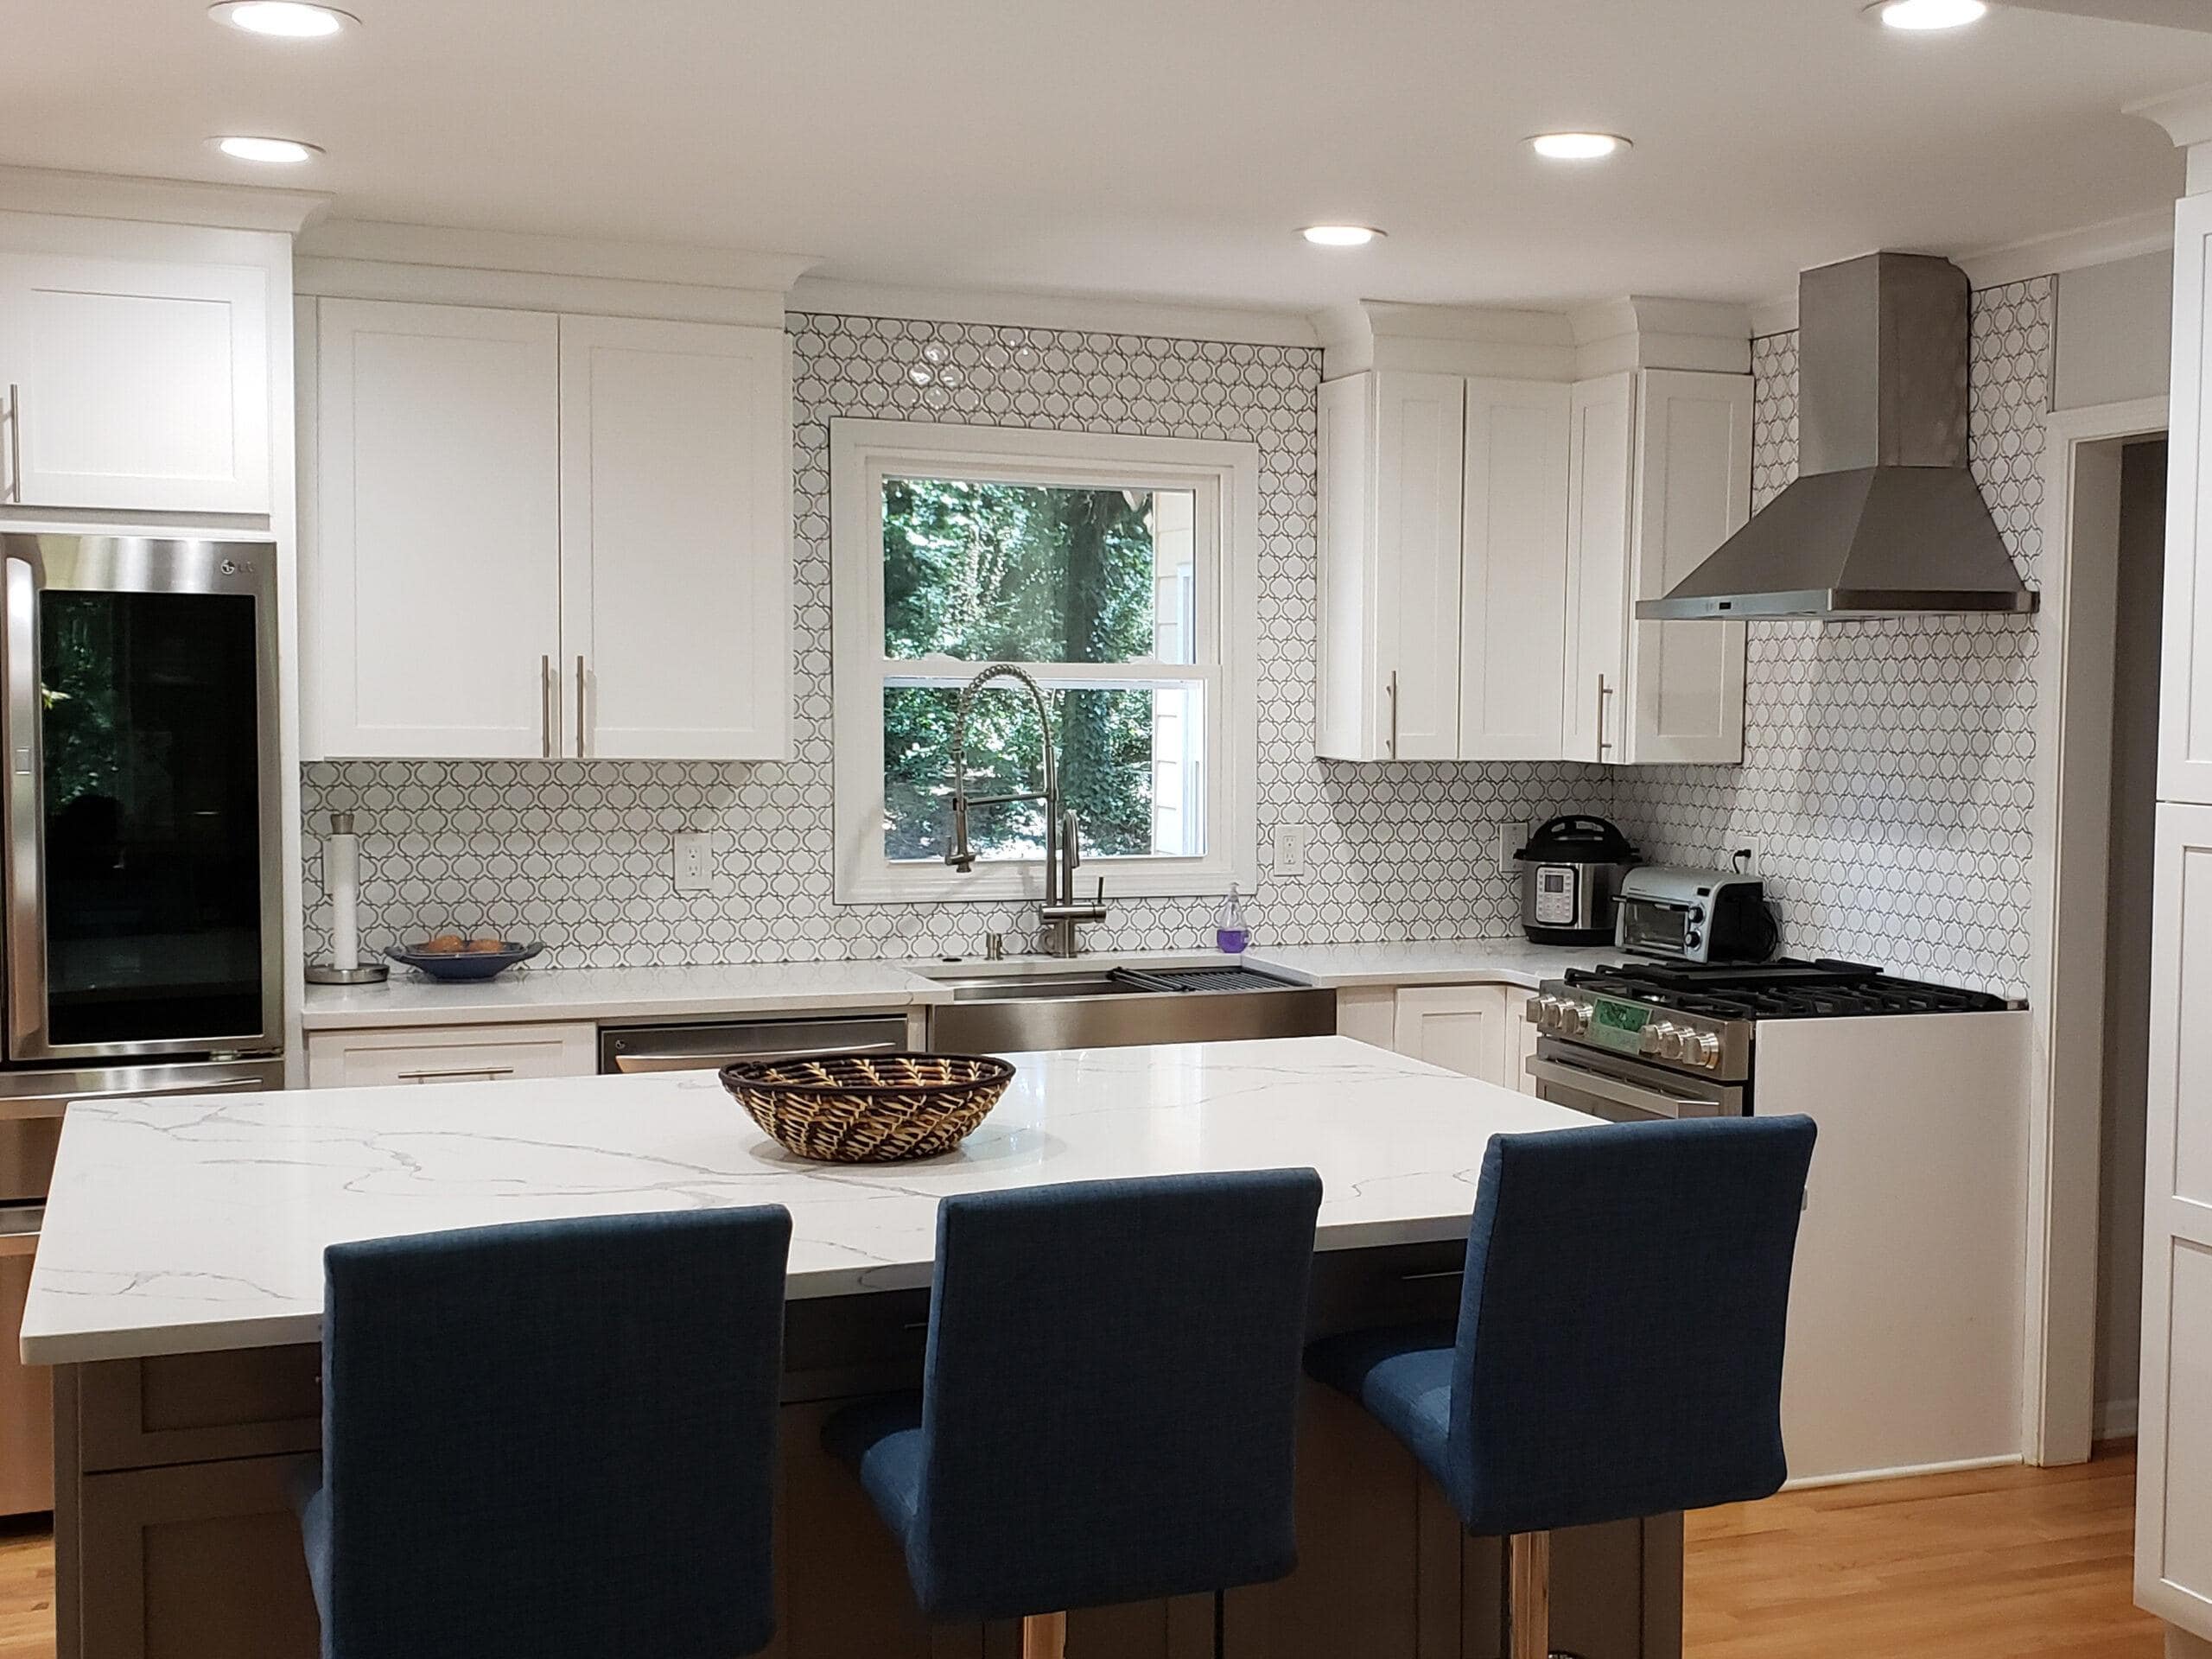 Kitchen Design Studio & Remodeling of Atlanta, US, condo kitchen renovation